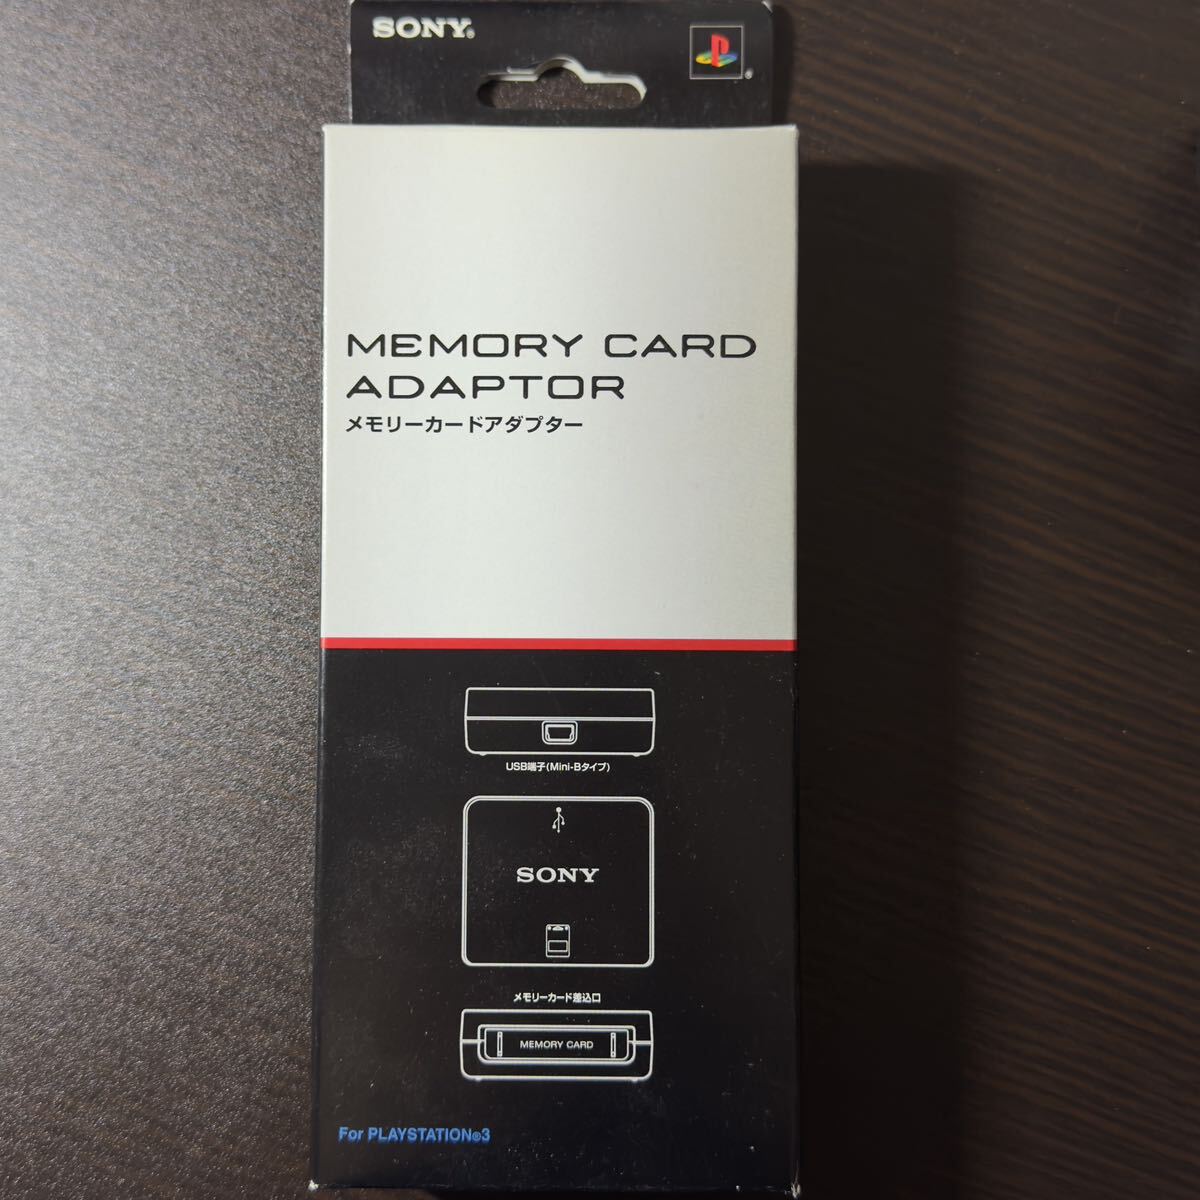 SONY MEMORY CARD ADAPTOR ソニーメモリーカードアダプター for PLAYSTATION3